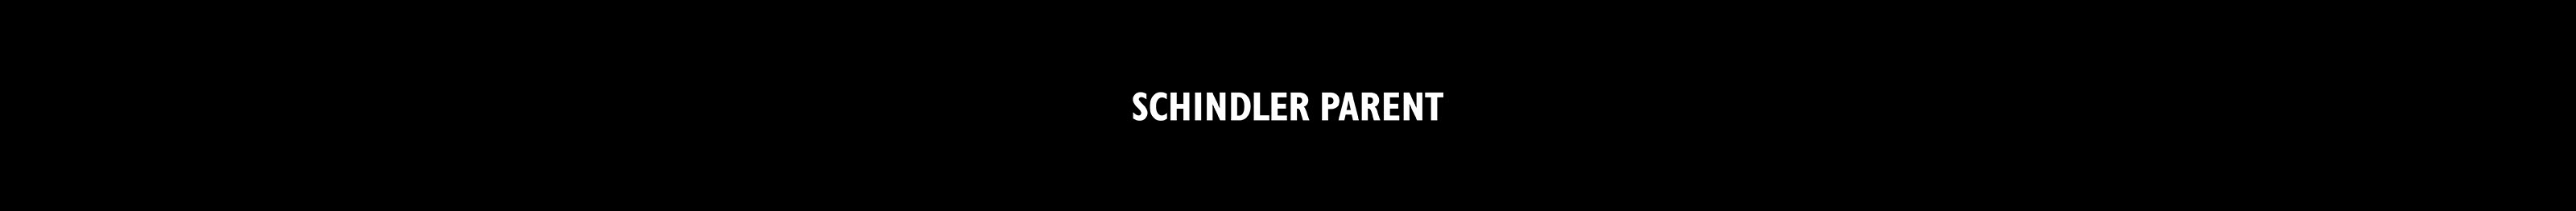 Schindler Parent's profile banner